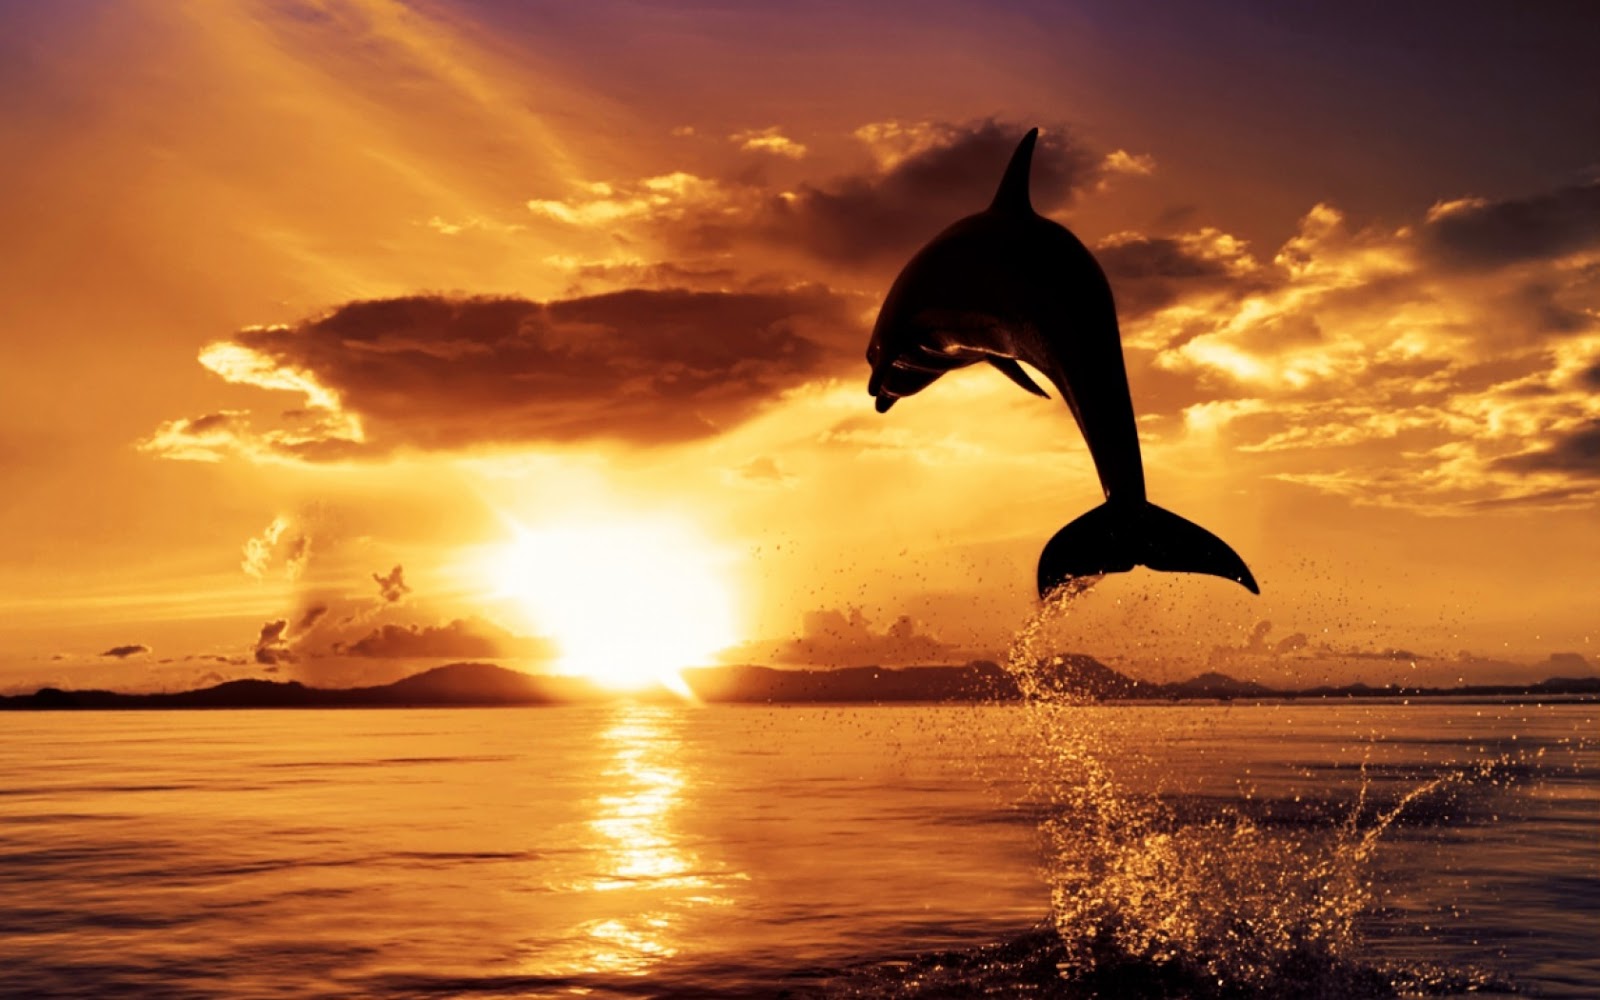 36+] Wallpaper Dolphin Sunset - WallpaperSafari